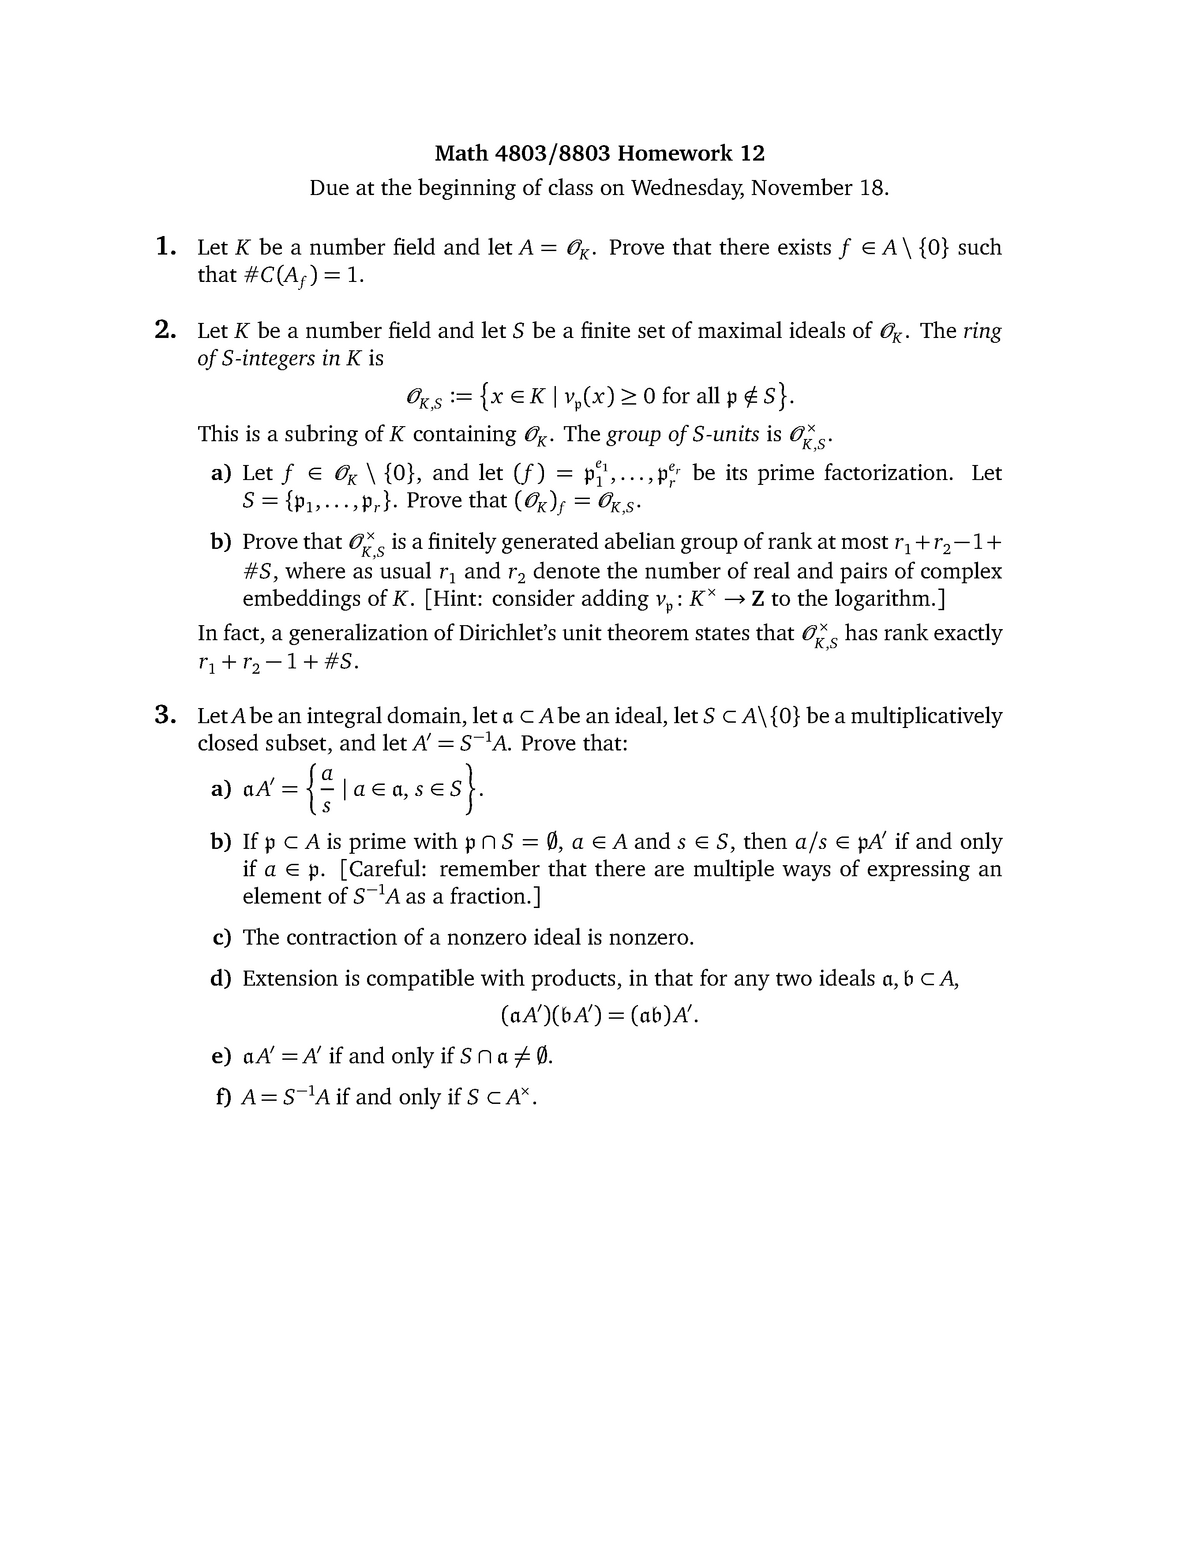 homework 1 math background 23 24 answers